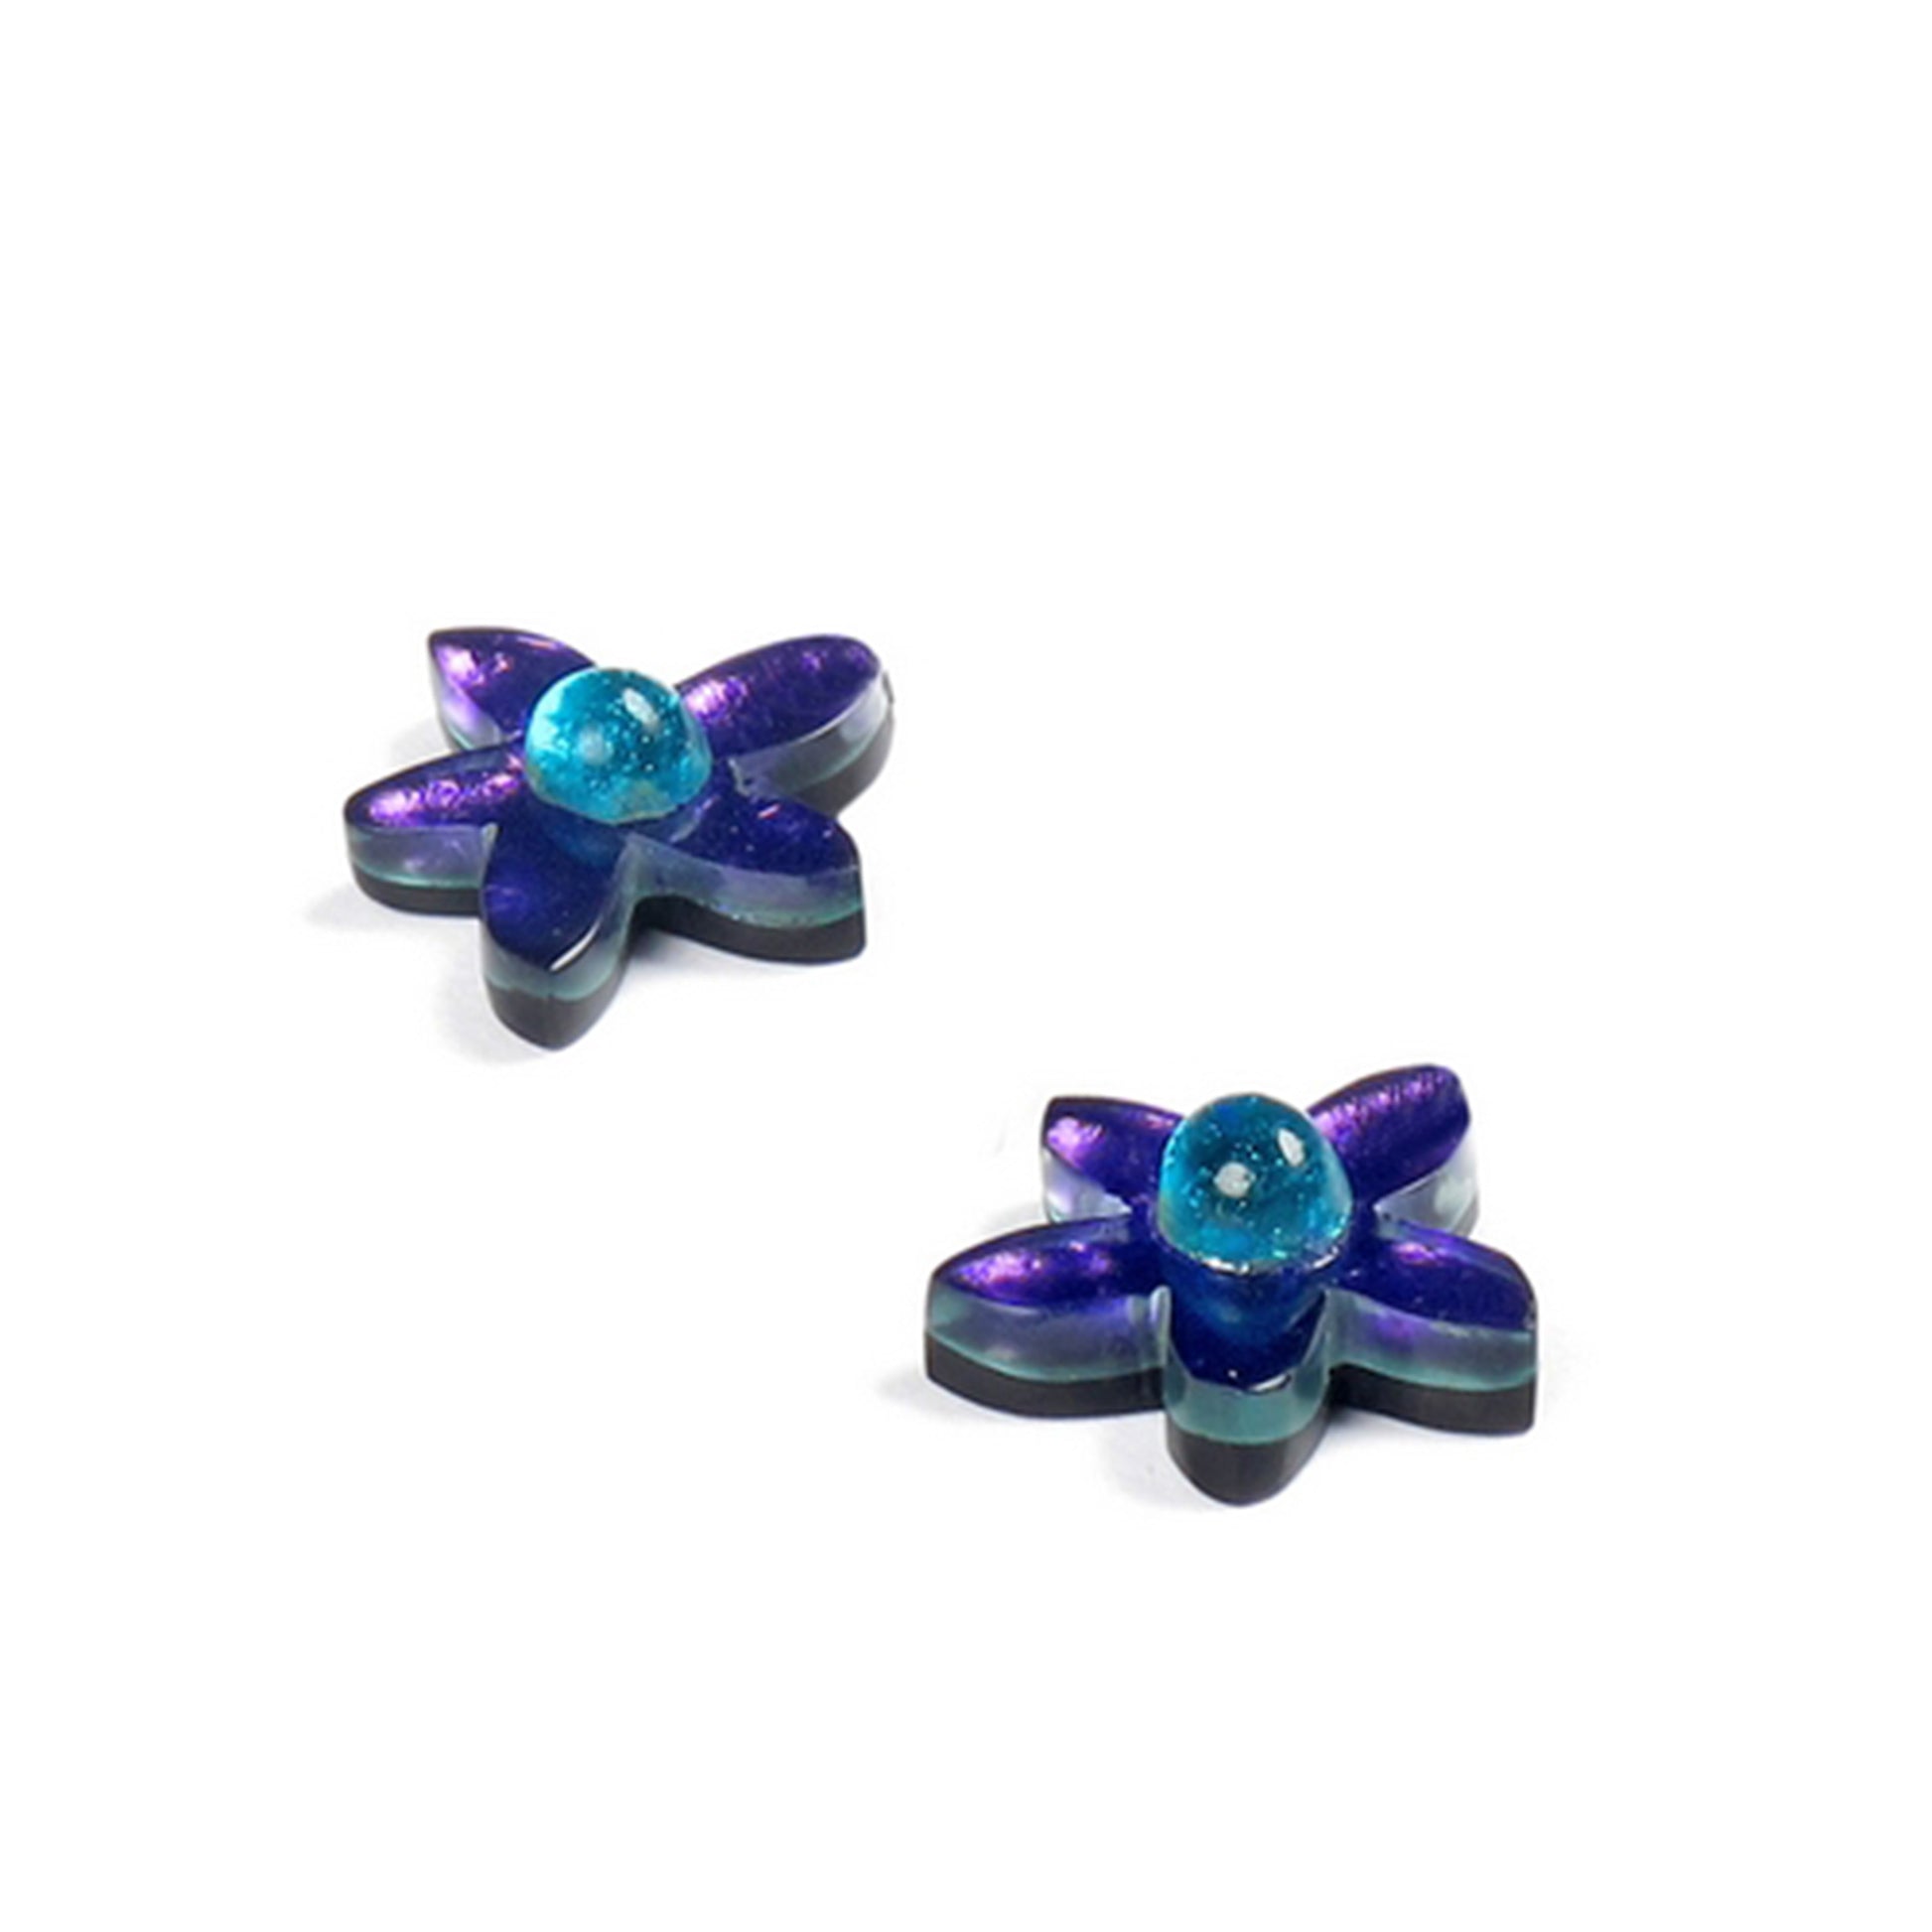 Peacock Flower Shiny Stud Earrings